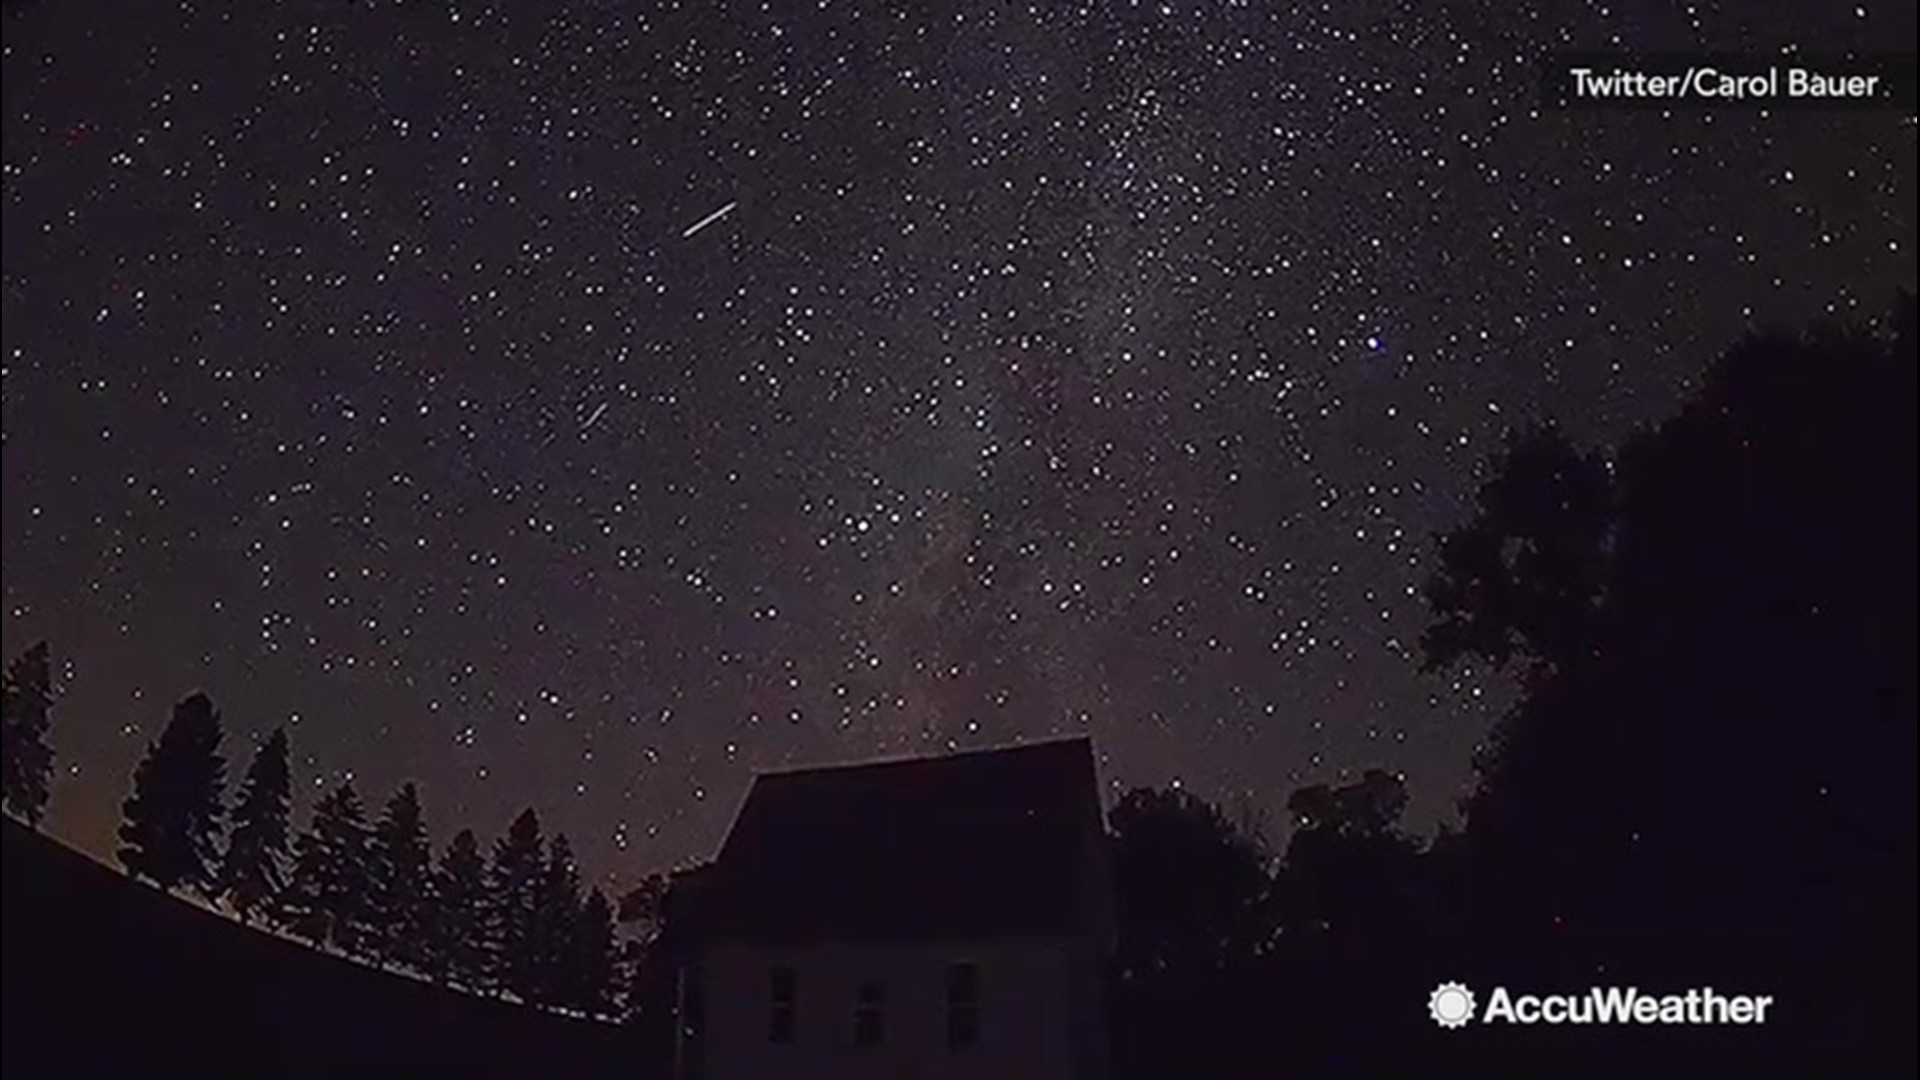 Meteor shower caught in stunning night sky timelapse